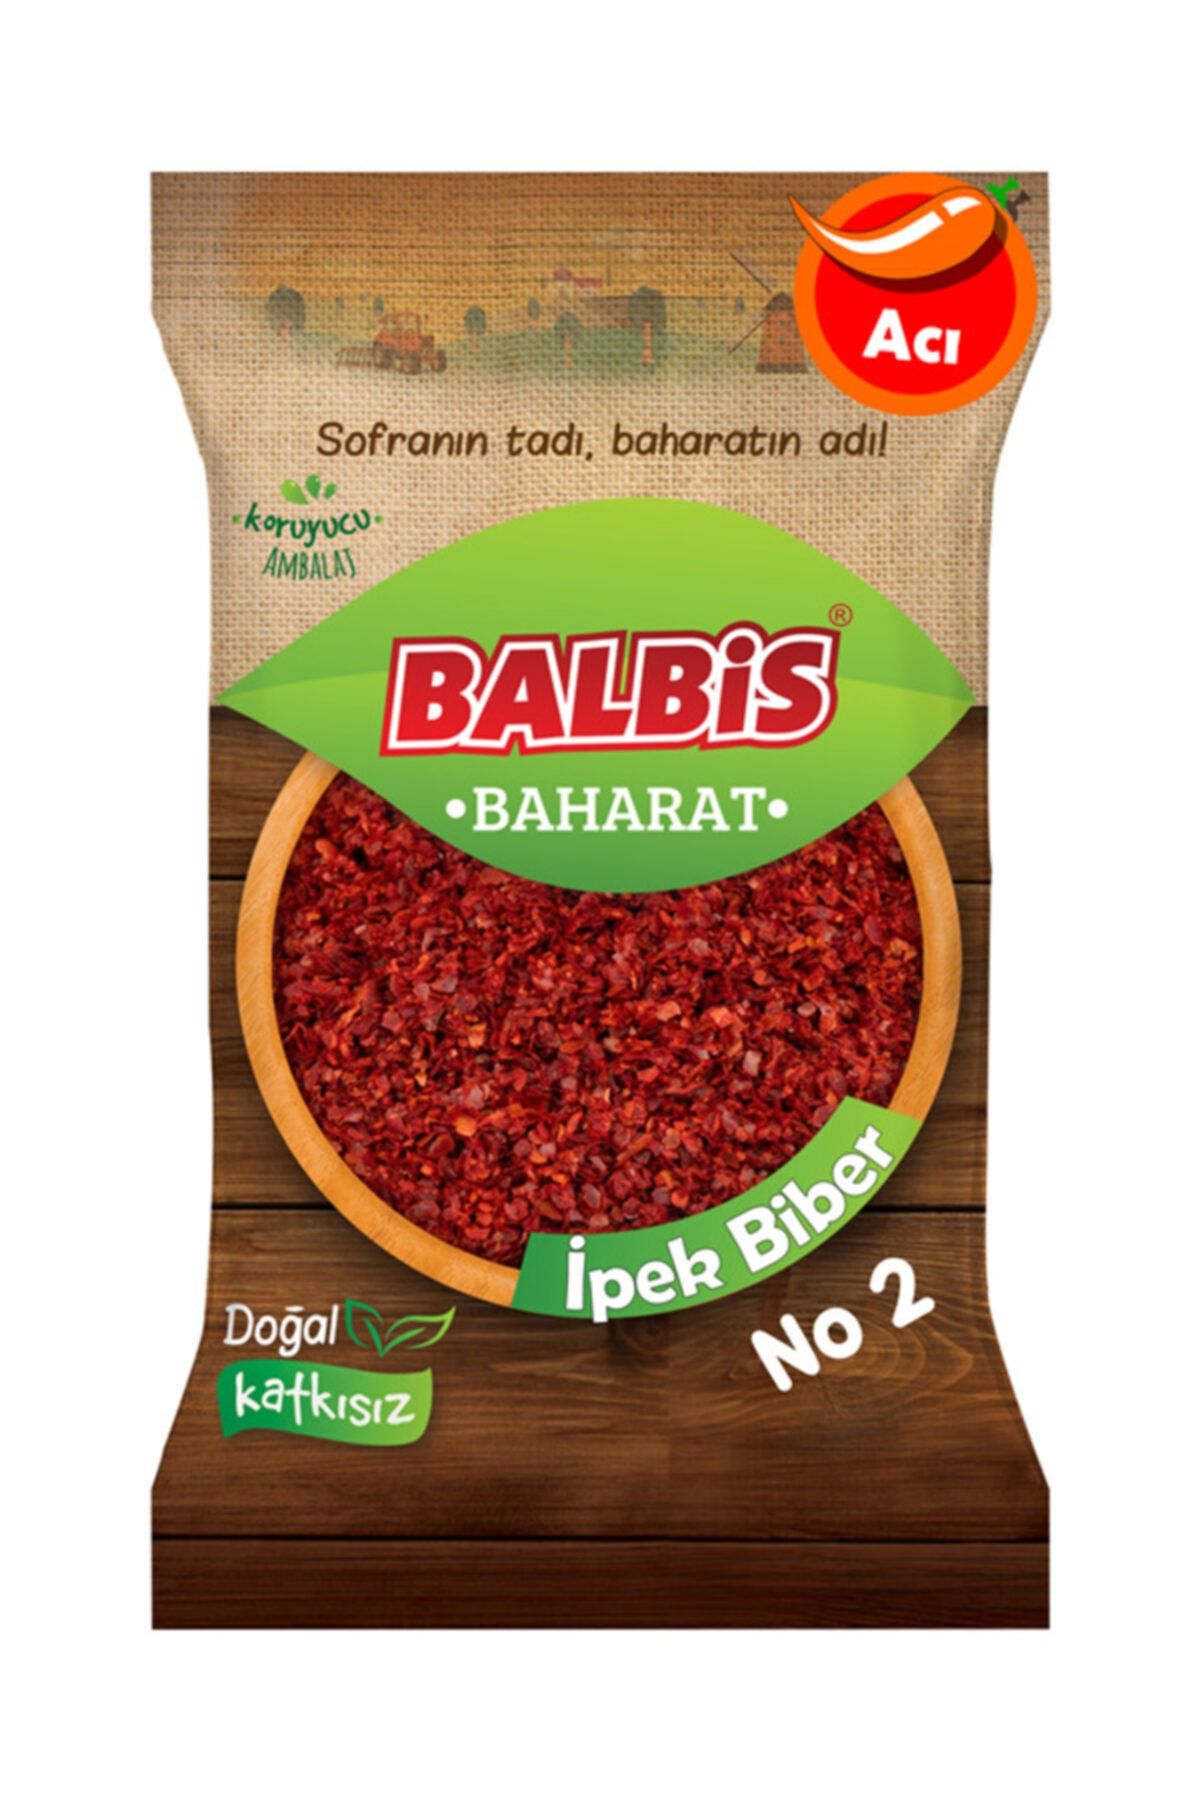 Balbis Ipek Biber No 2 1000 gr